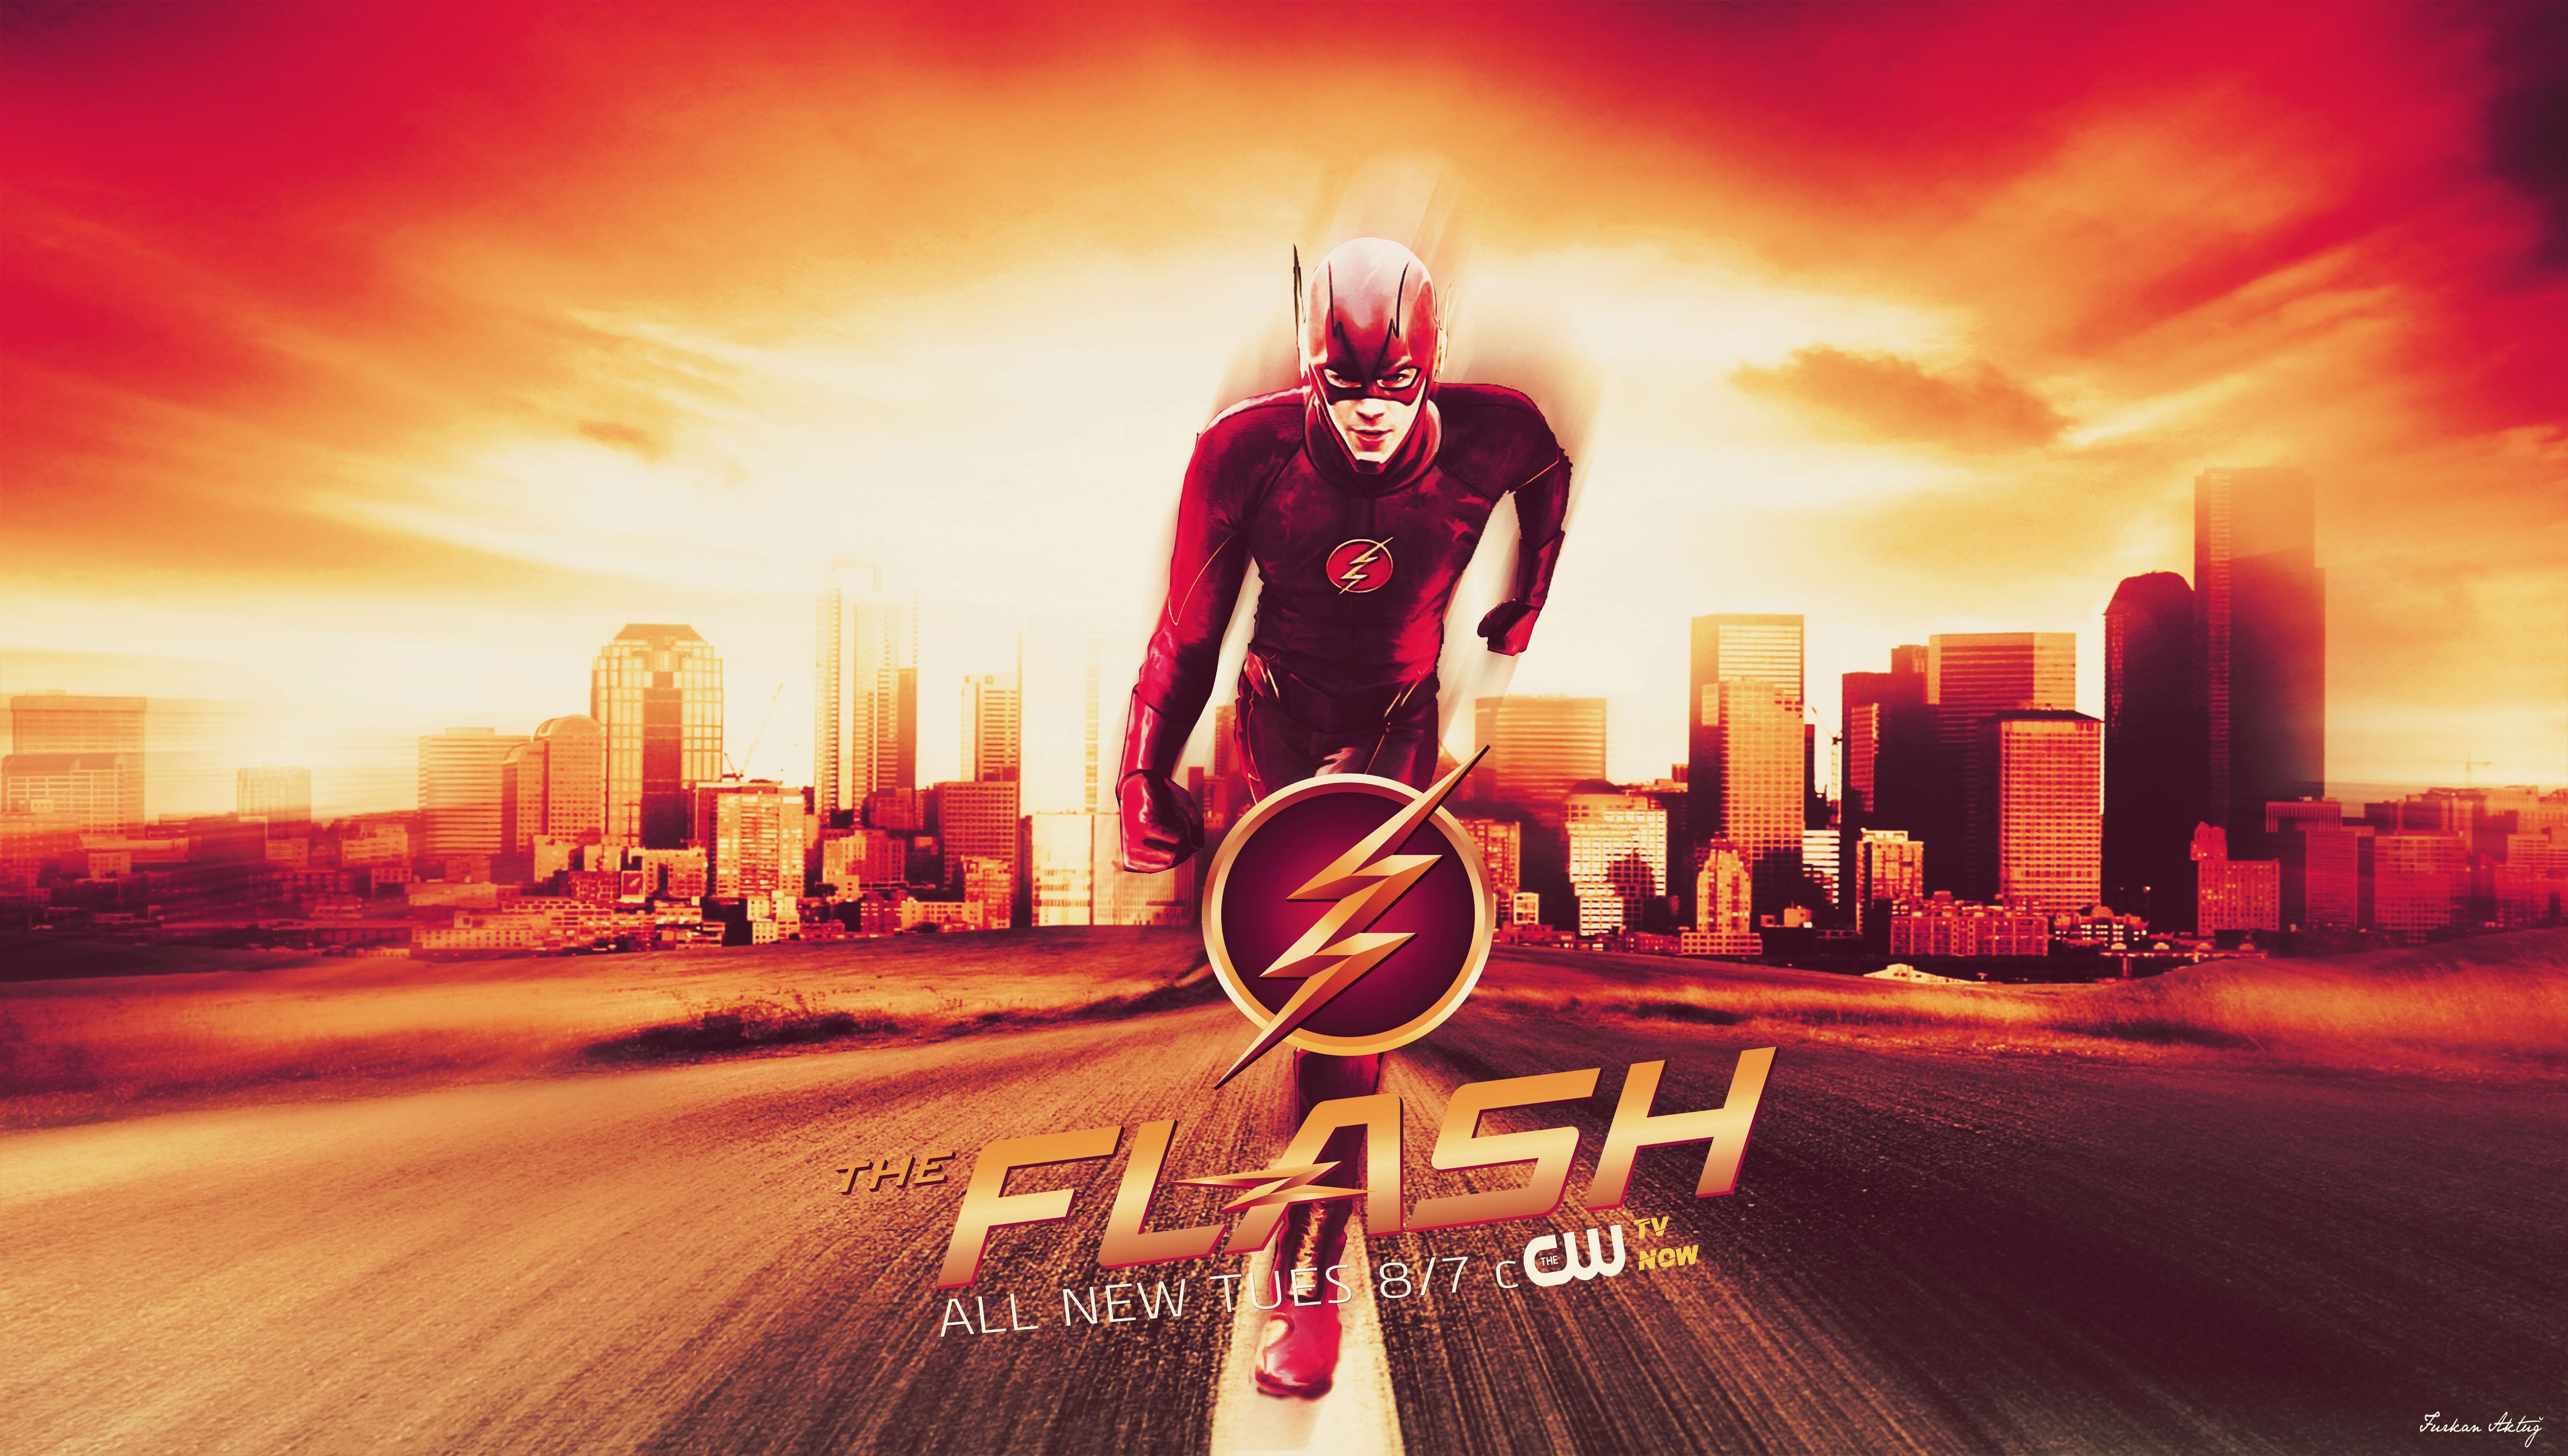 Hd The Flash Wallpaper The Flash